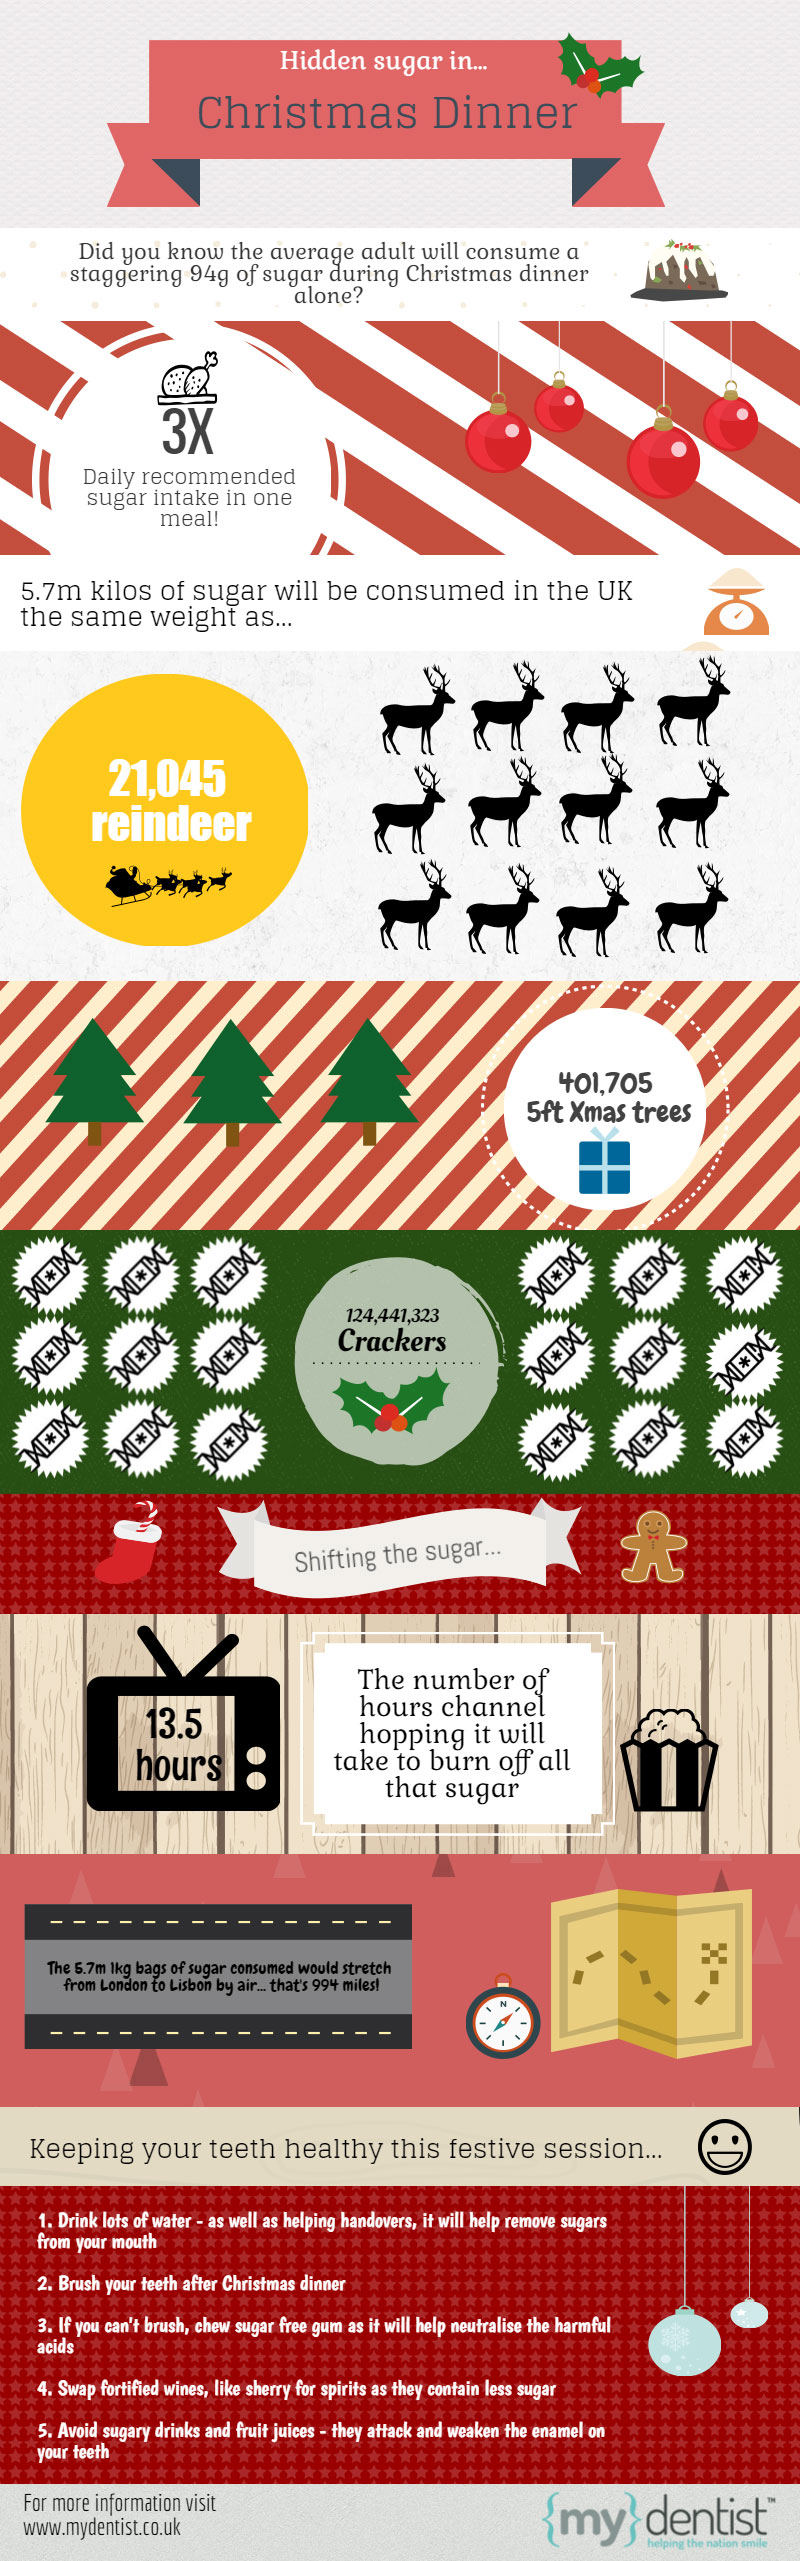 mydentist Christmas infographic December